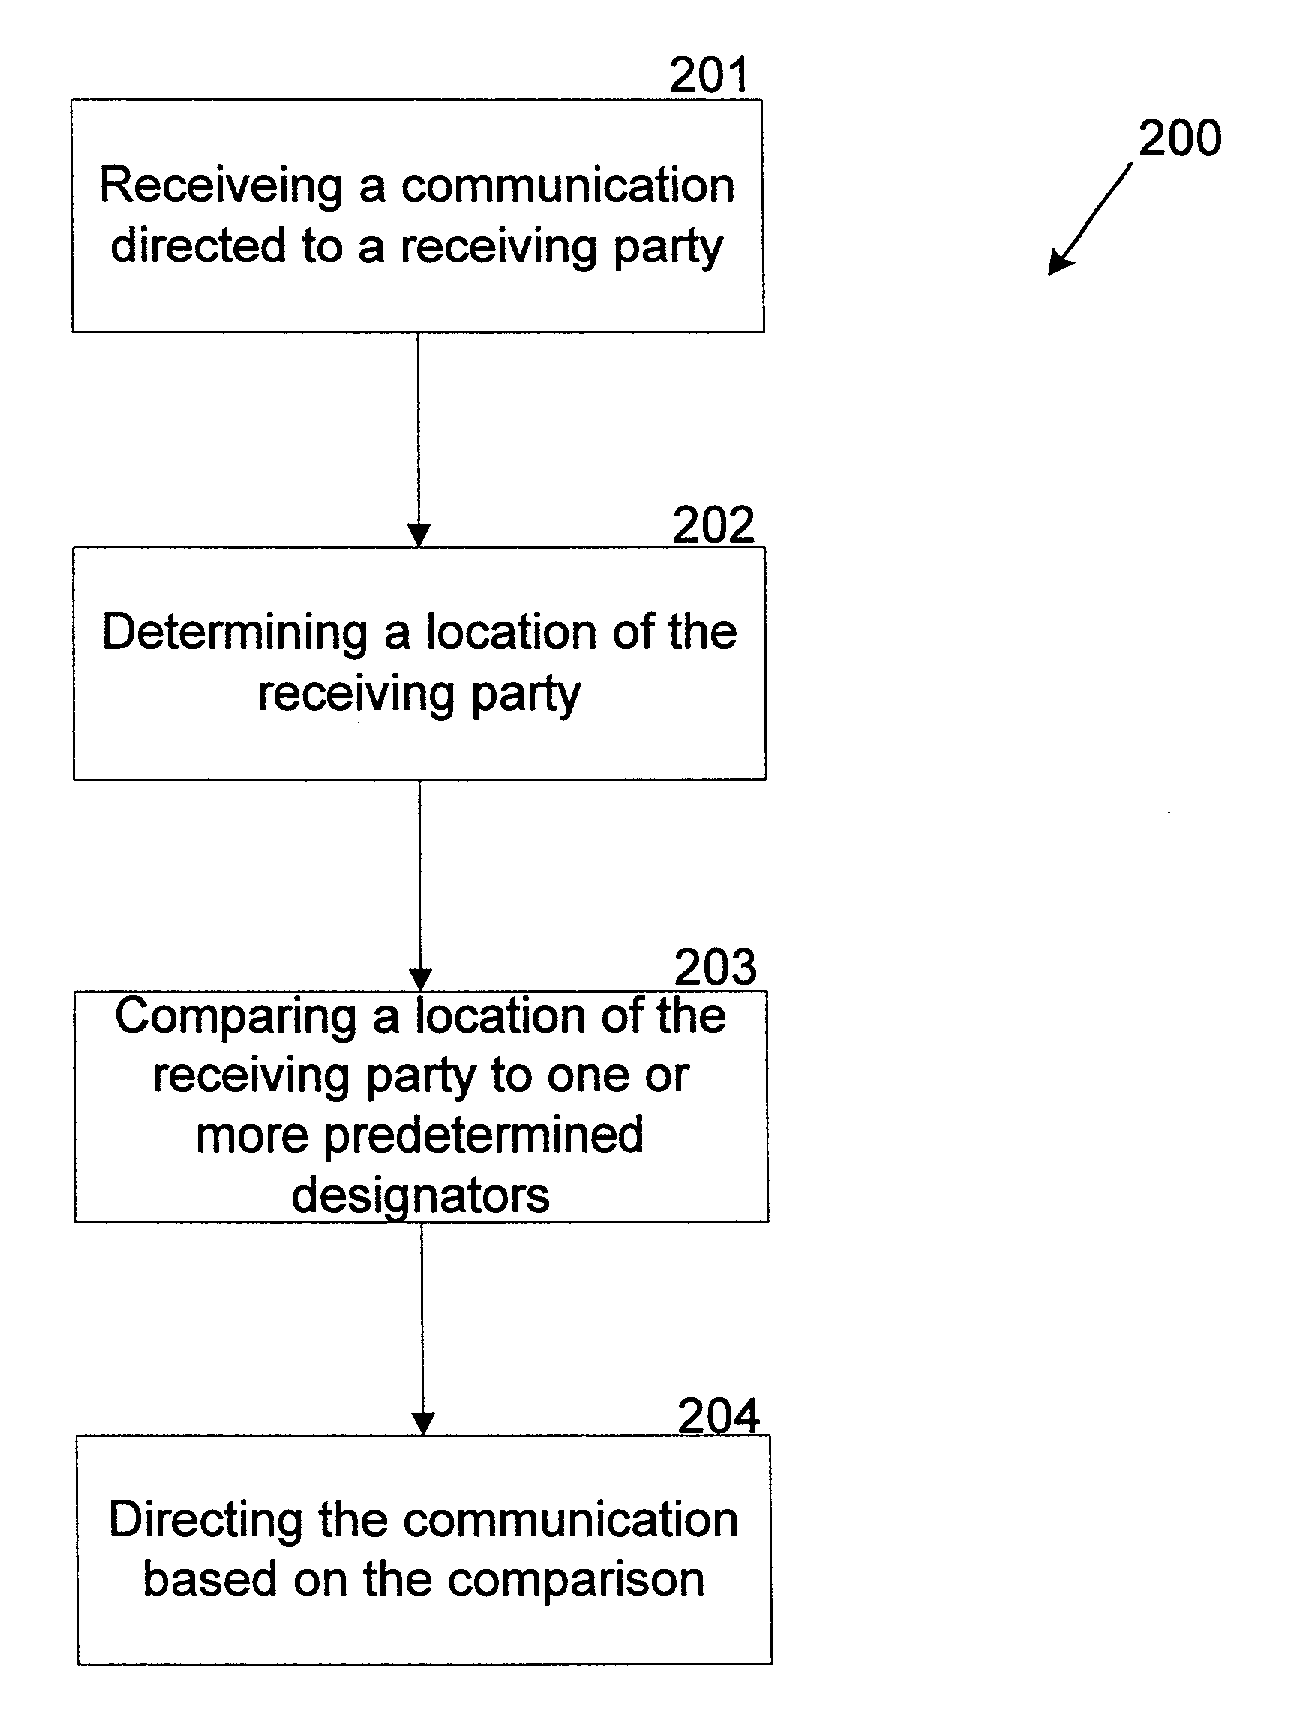 Location-based forwarding of a communication